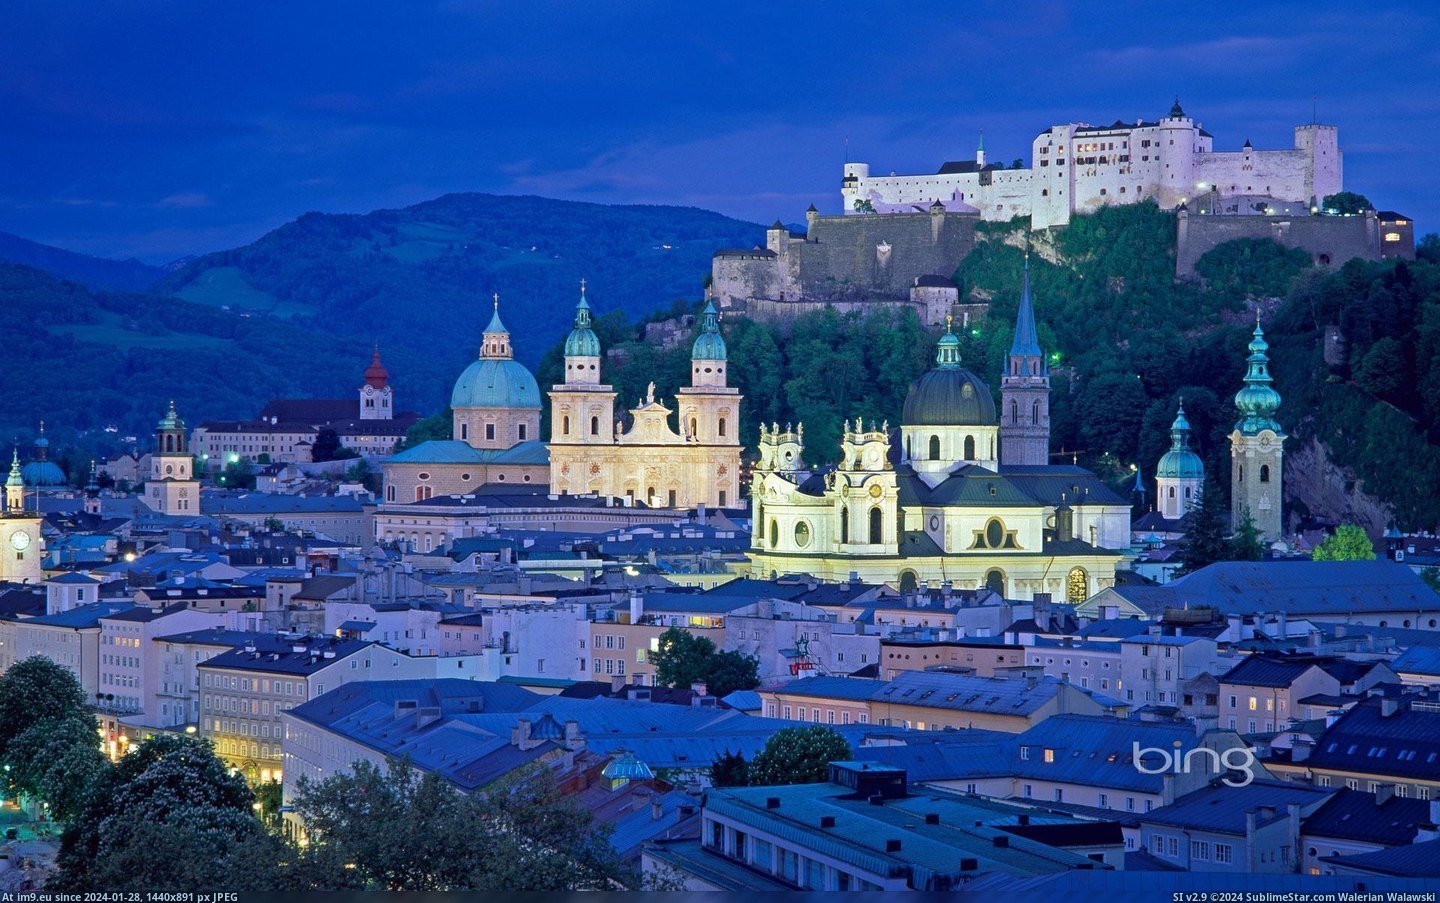 View of Salzburg, Austria (in Bing Photos November 2012)